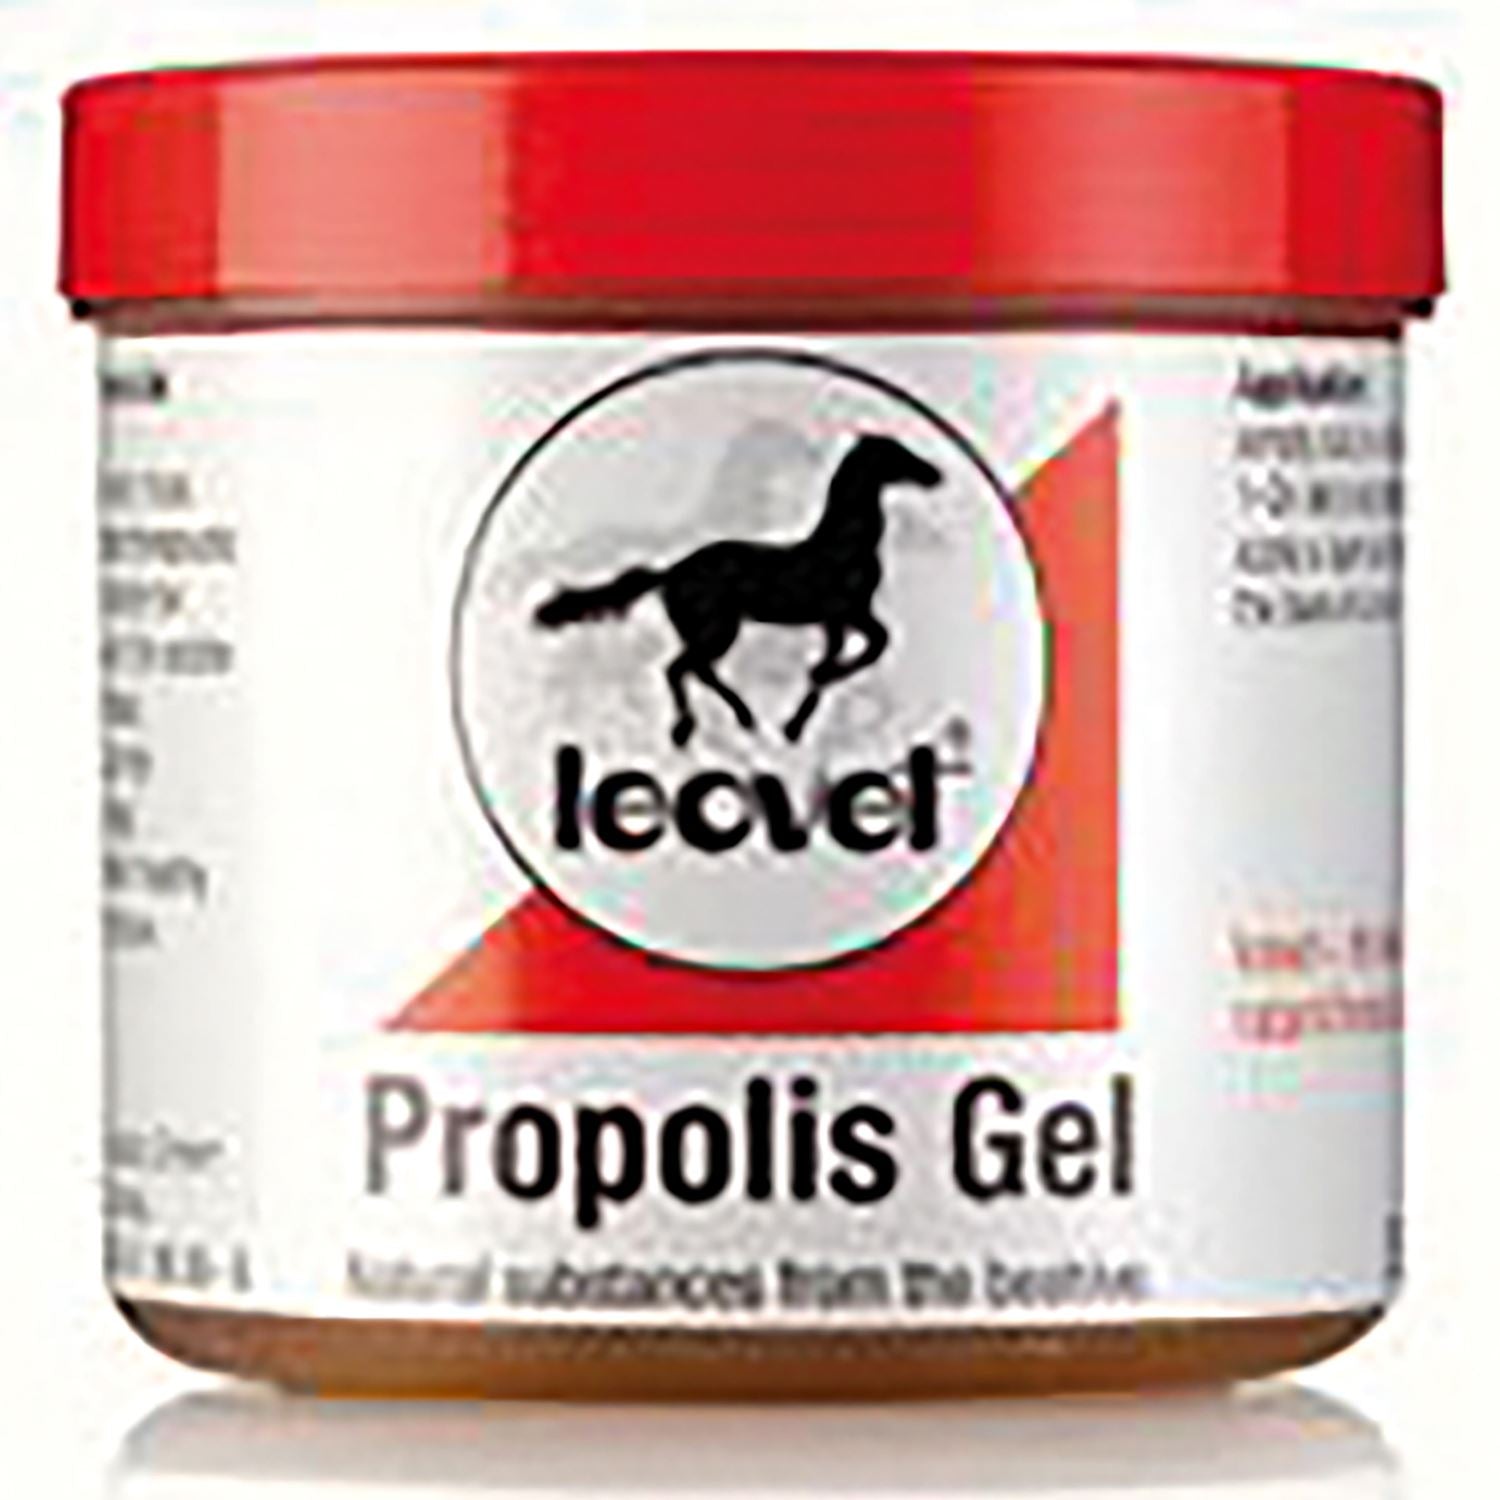 Leovet Propolis Gel - Just Horse Riders